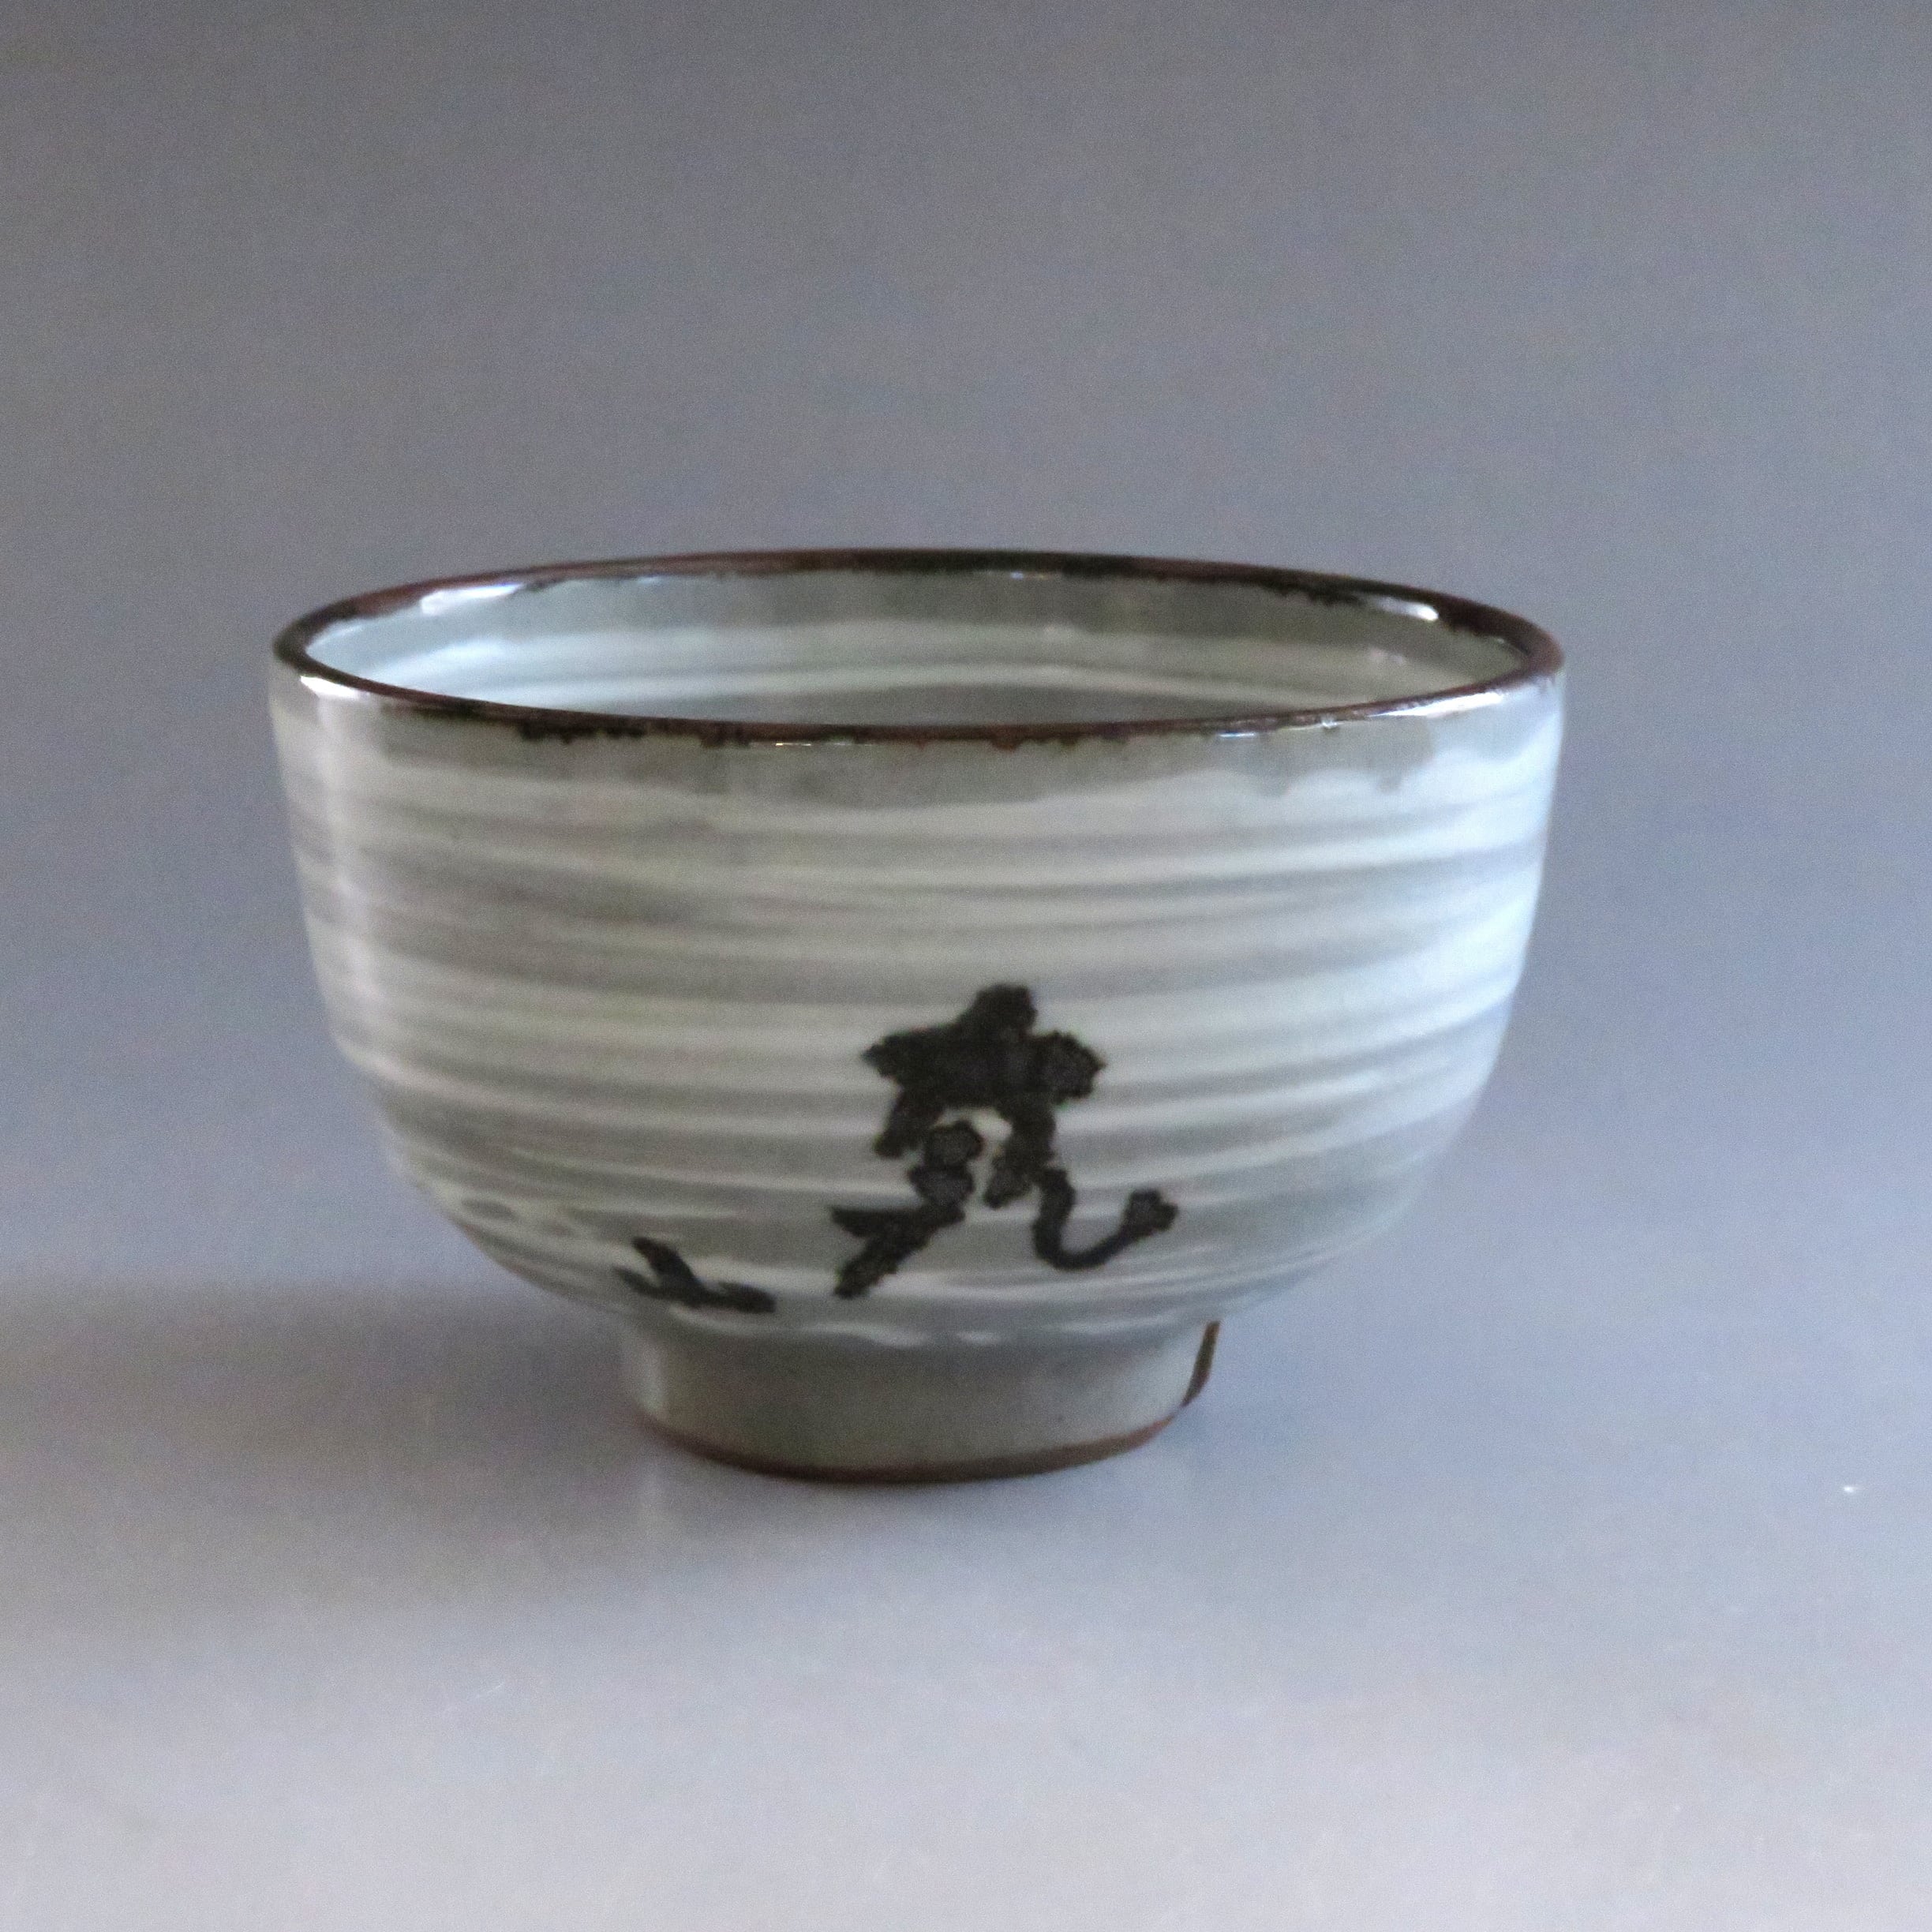 小さな入子茶碗 土谷瑞光 白磁茶碗 たち吉 万寿菊茶碗 茶箱 茶籠 携帯